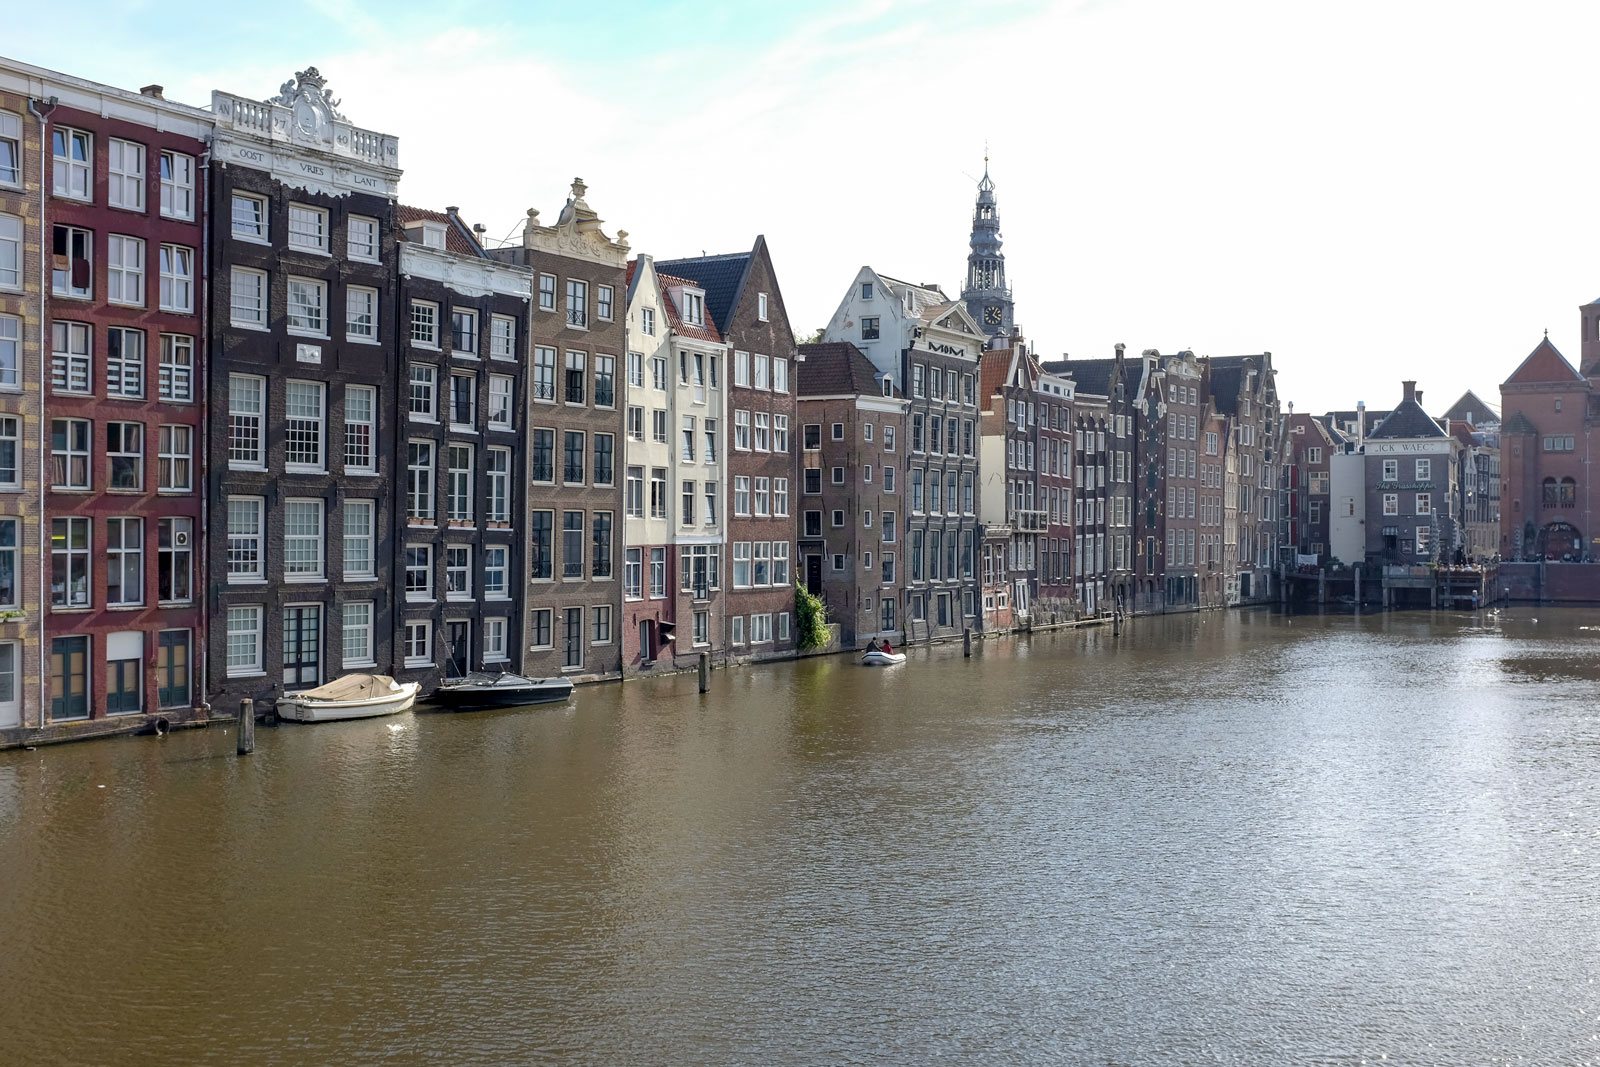 A postcard-like photo of Amsterdam